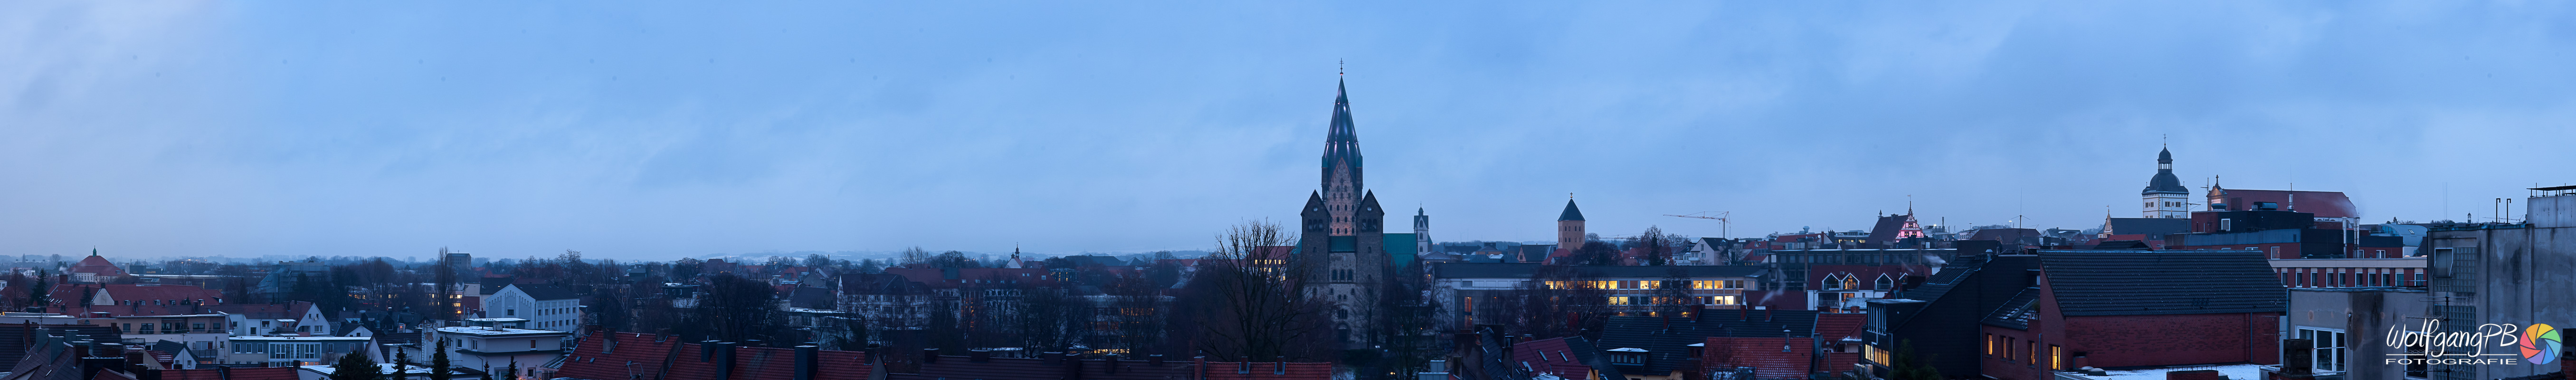 Panorama der Stadt Paderborn